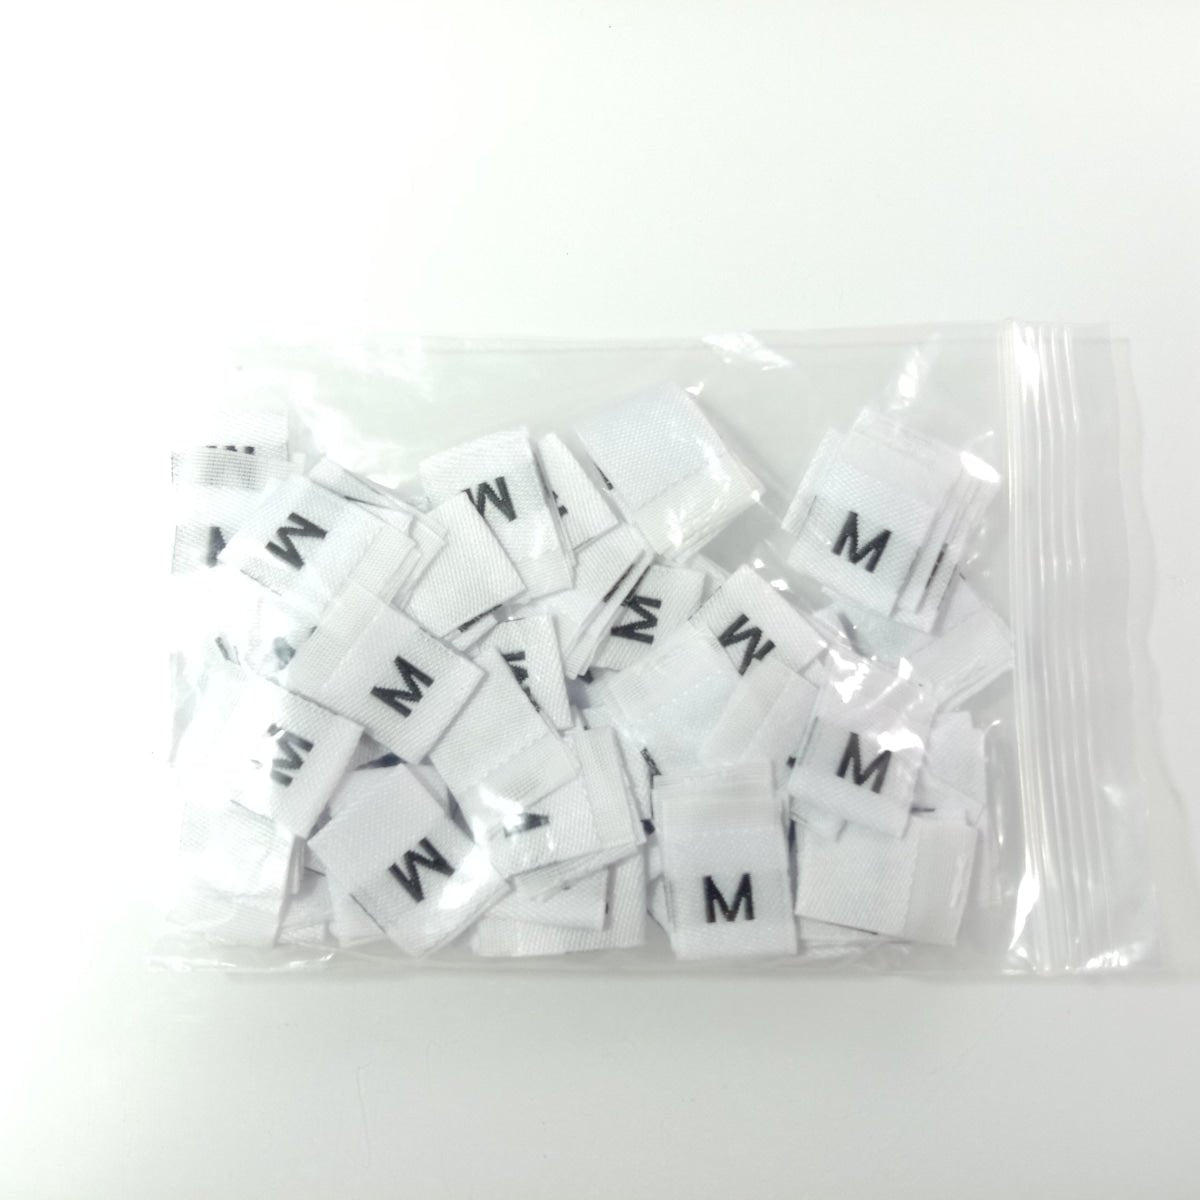 100pcs Clothing Size Label Tags XS S M L XL 2XL 3XL 4XL Black Text White Garment Clothes T Shirt Dress Fabric - M White - Asia Sell